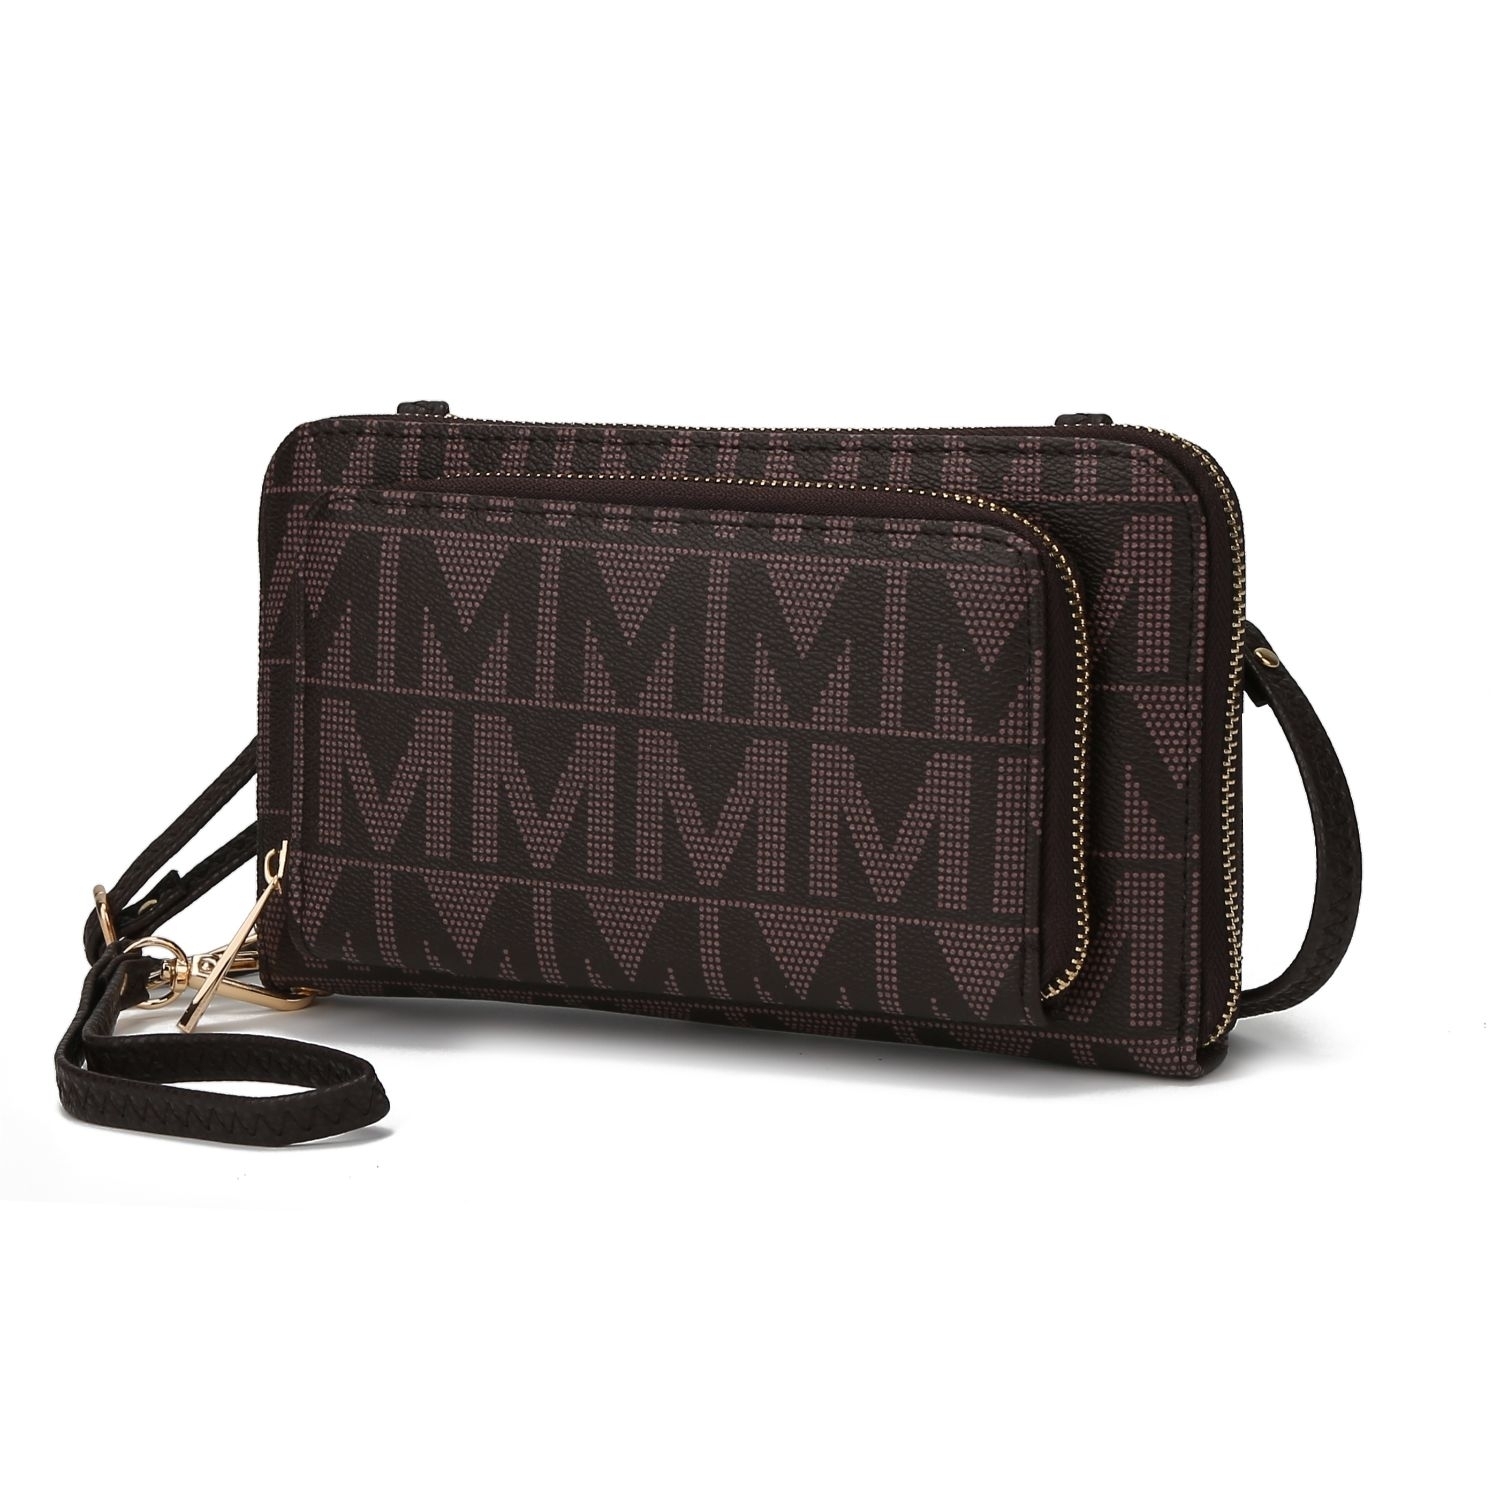 MKF Collection Dilma Wallet Smartphone Convertible Crossbody Handbag By Mia K - Chocolate